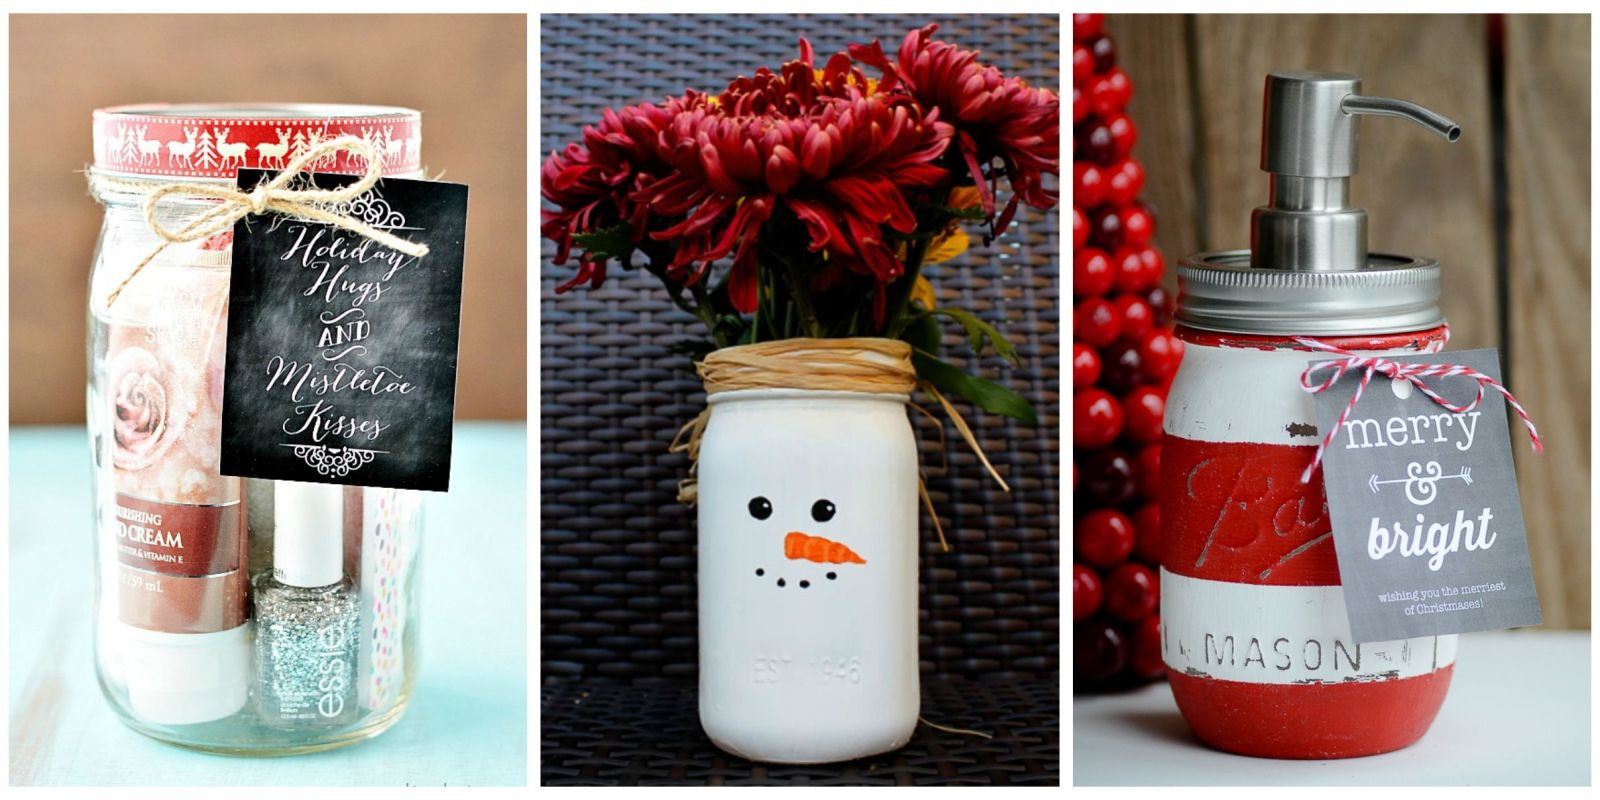 DIY Christmas Mason Jar Gifts
 25 DIY Mason Jar Gift Ideas Homemade Christmas Gifts in